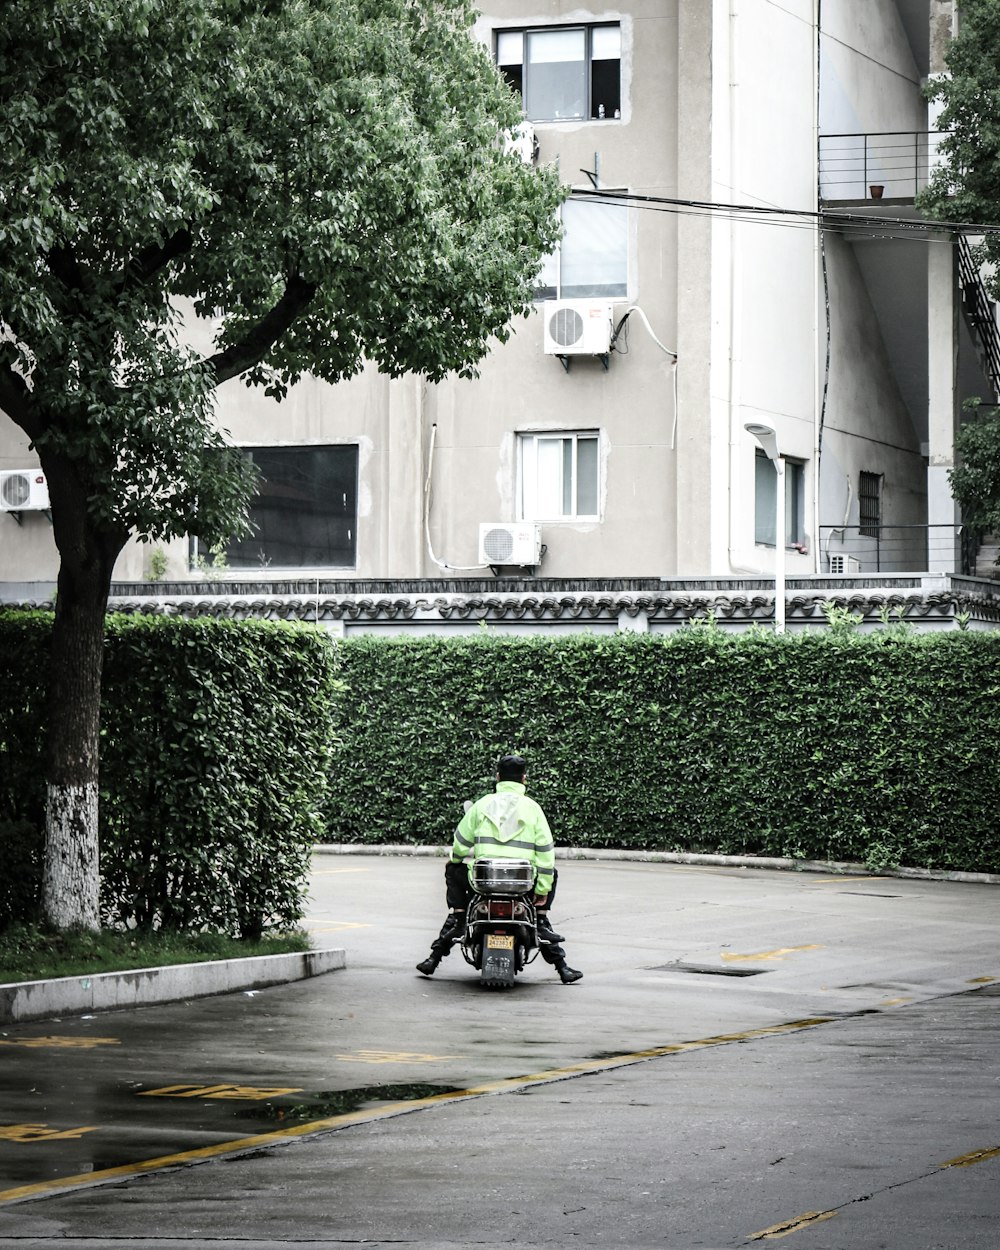 man in green shirt riding motorcycle on road during daytime